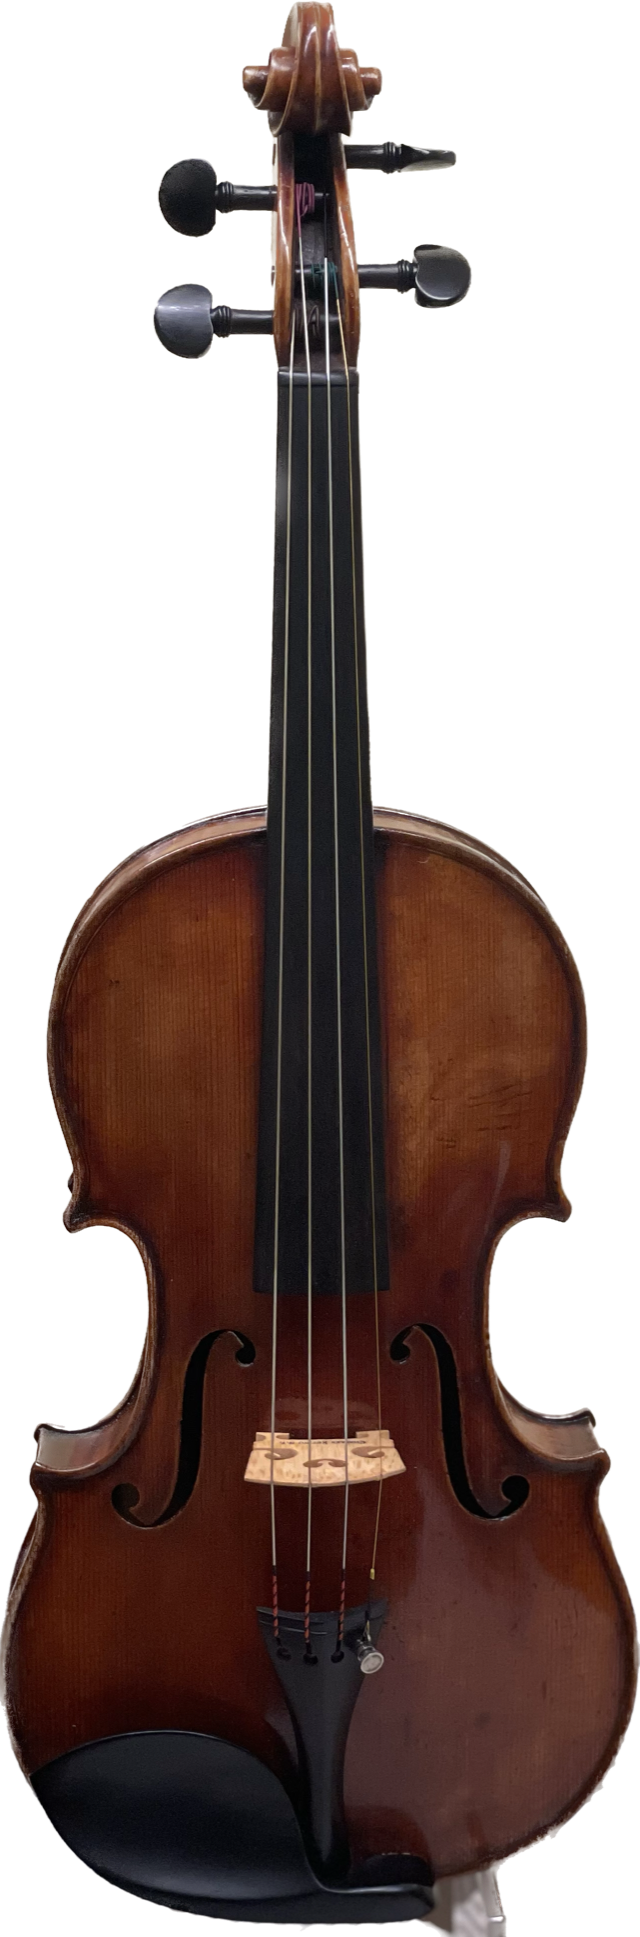 John Friedrich violin 1893